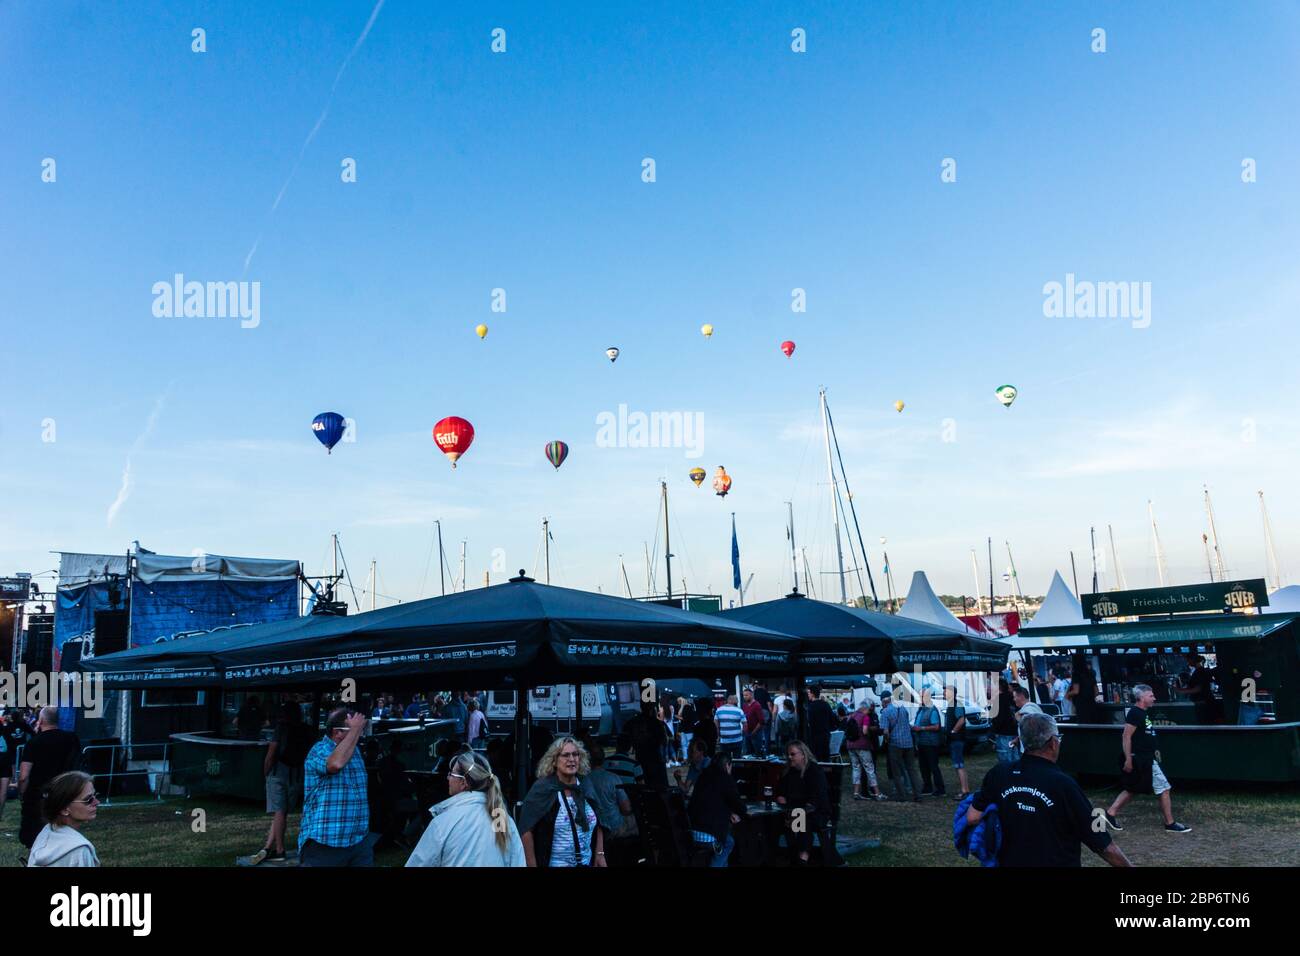 Ballon sail hi-res stock photography and images - Alamy